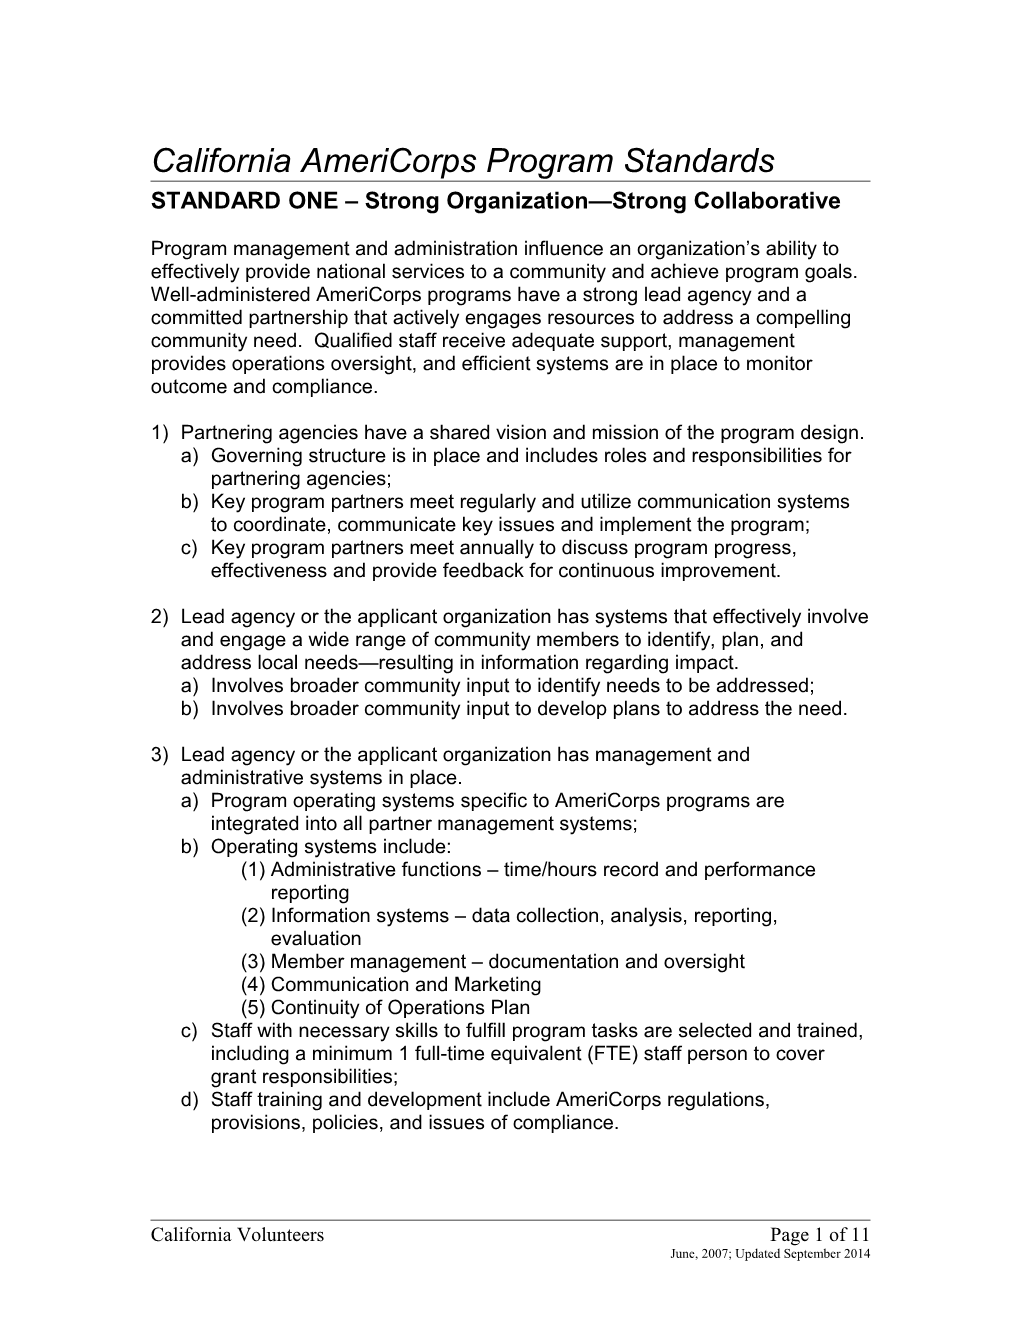 California Program Standards